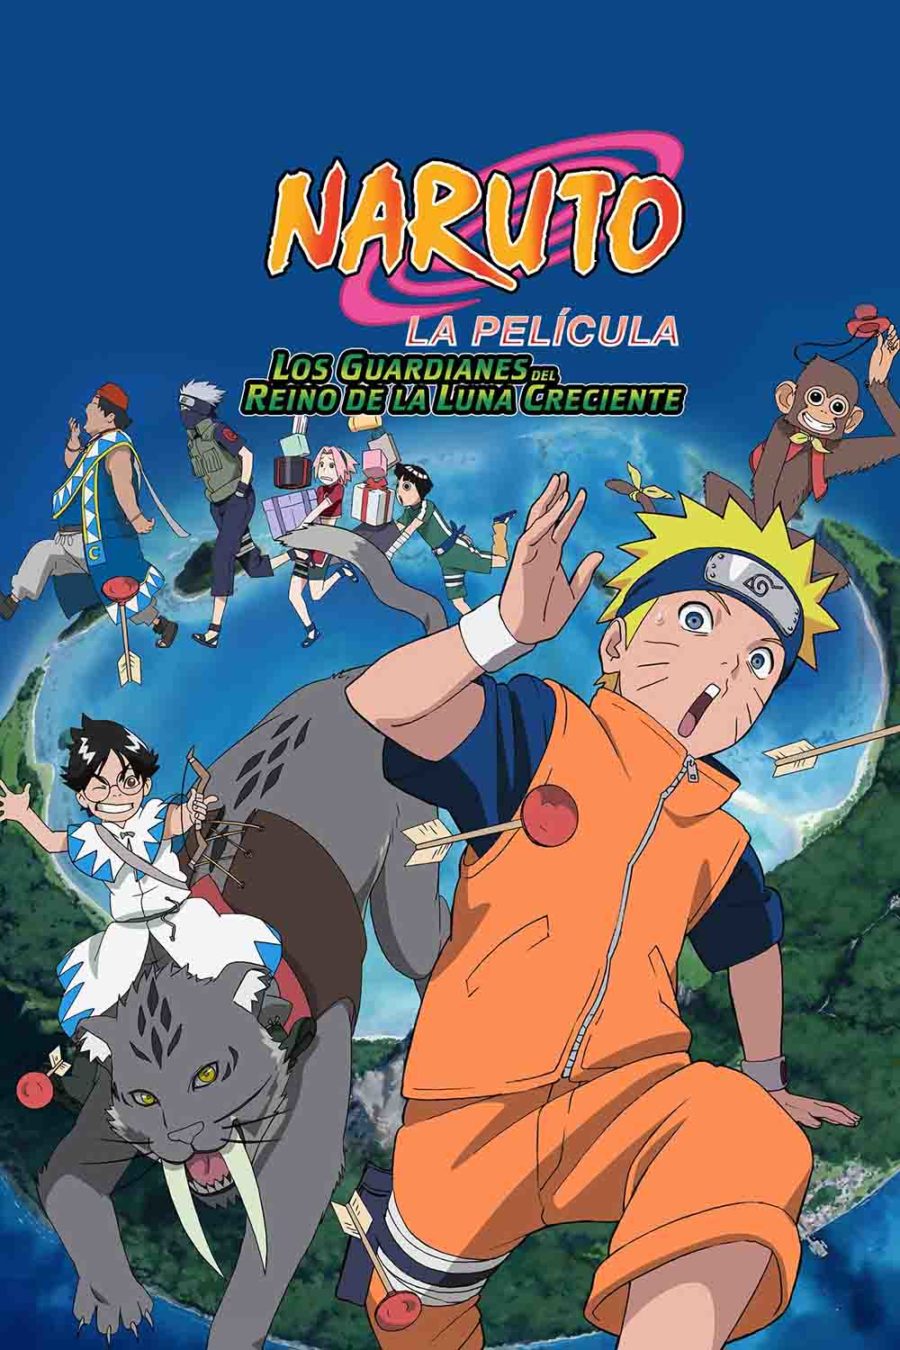 Claro Video retira 7 películas de Naruto, con Netflix siendo ahora su  proximo destino – ANMTV